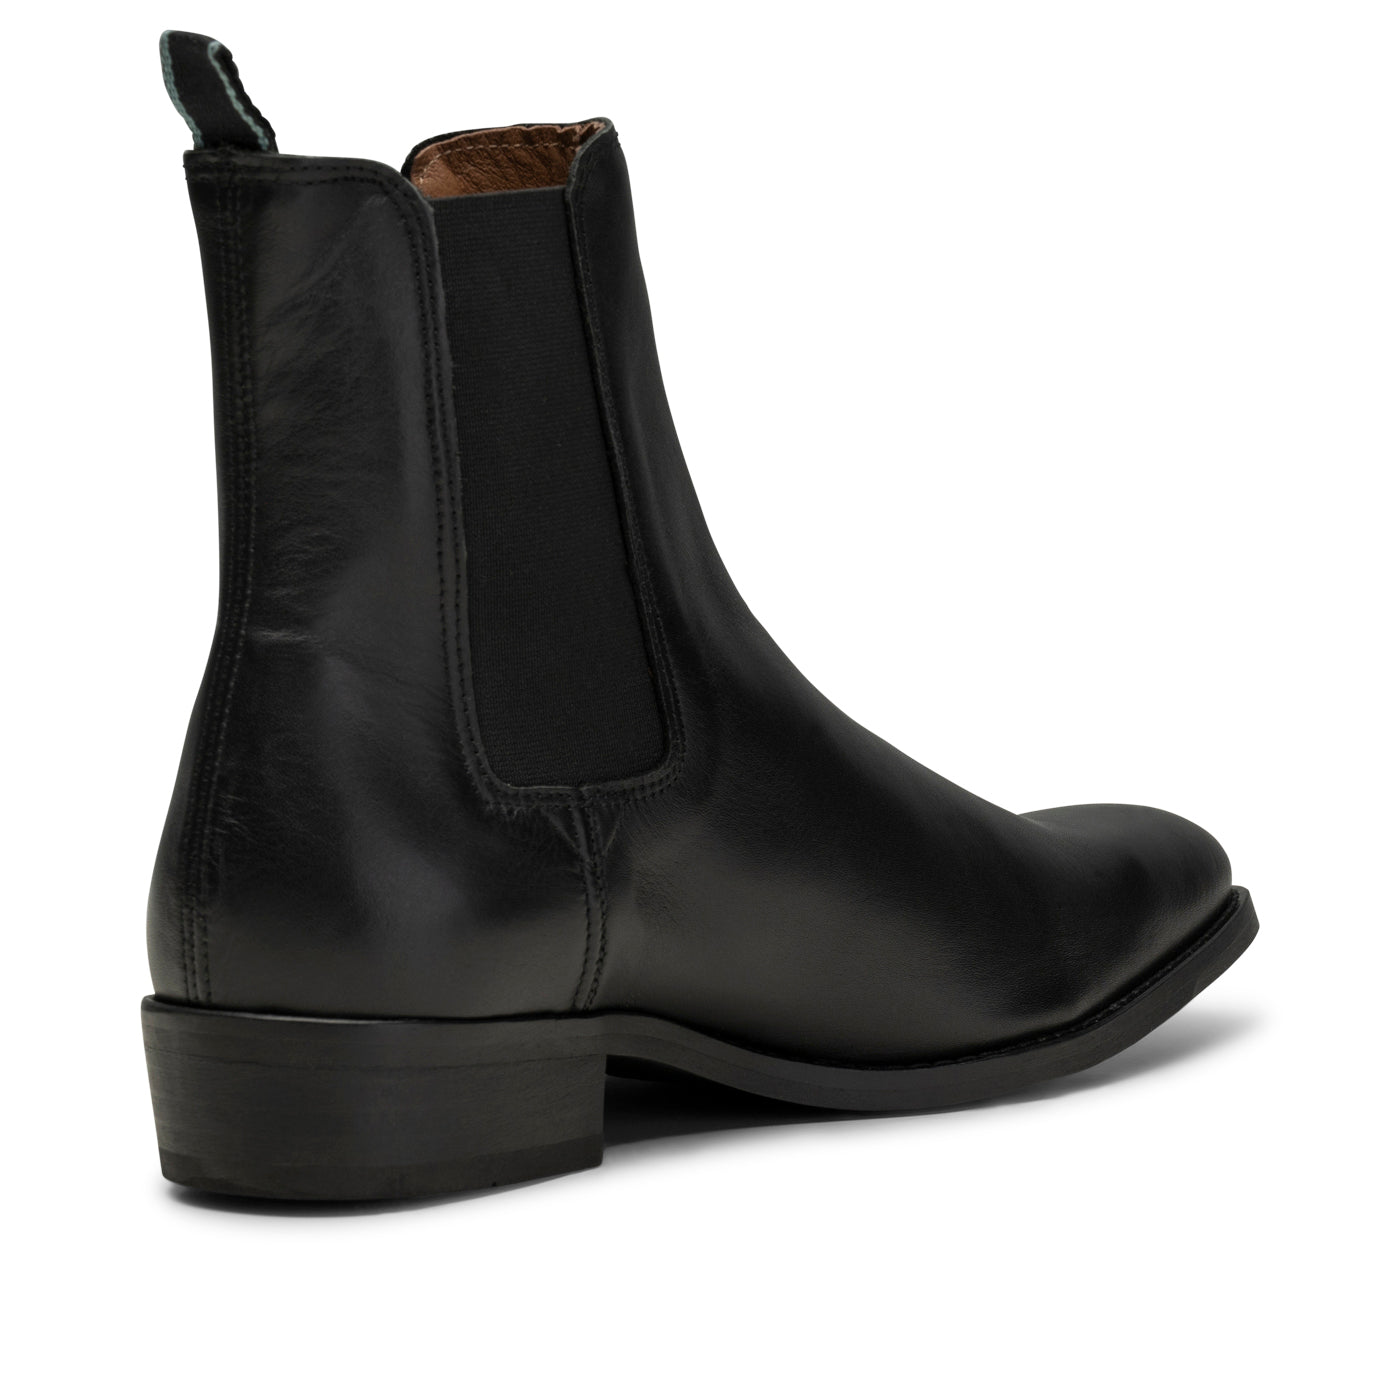 SHOE THE BEAR MENS Eli chelsea boot leather Boots 110 BLACK